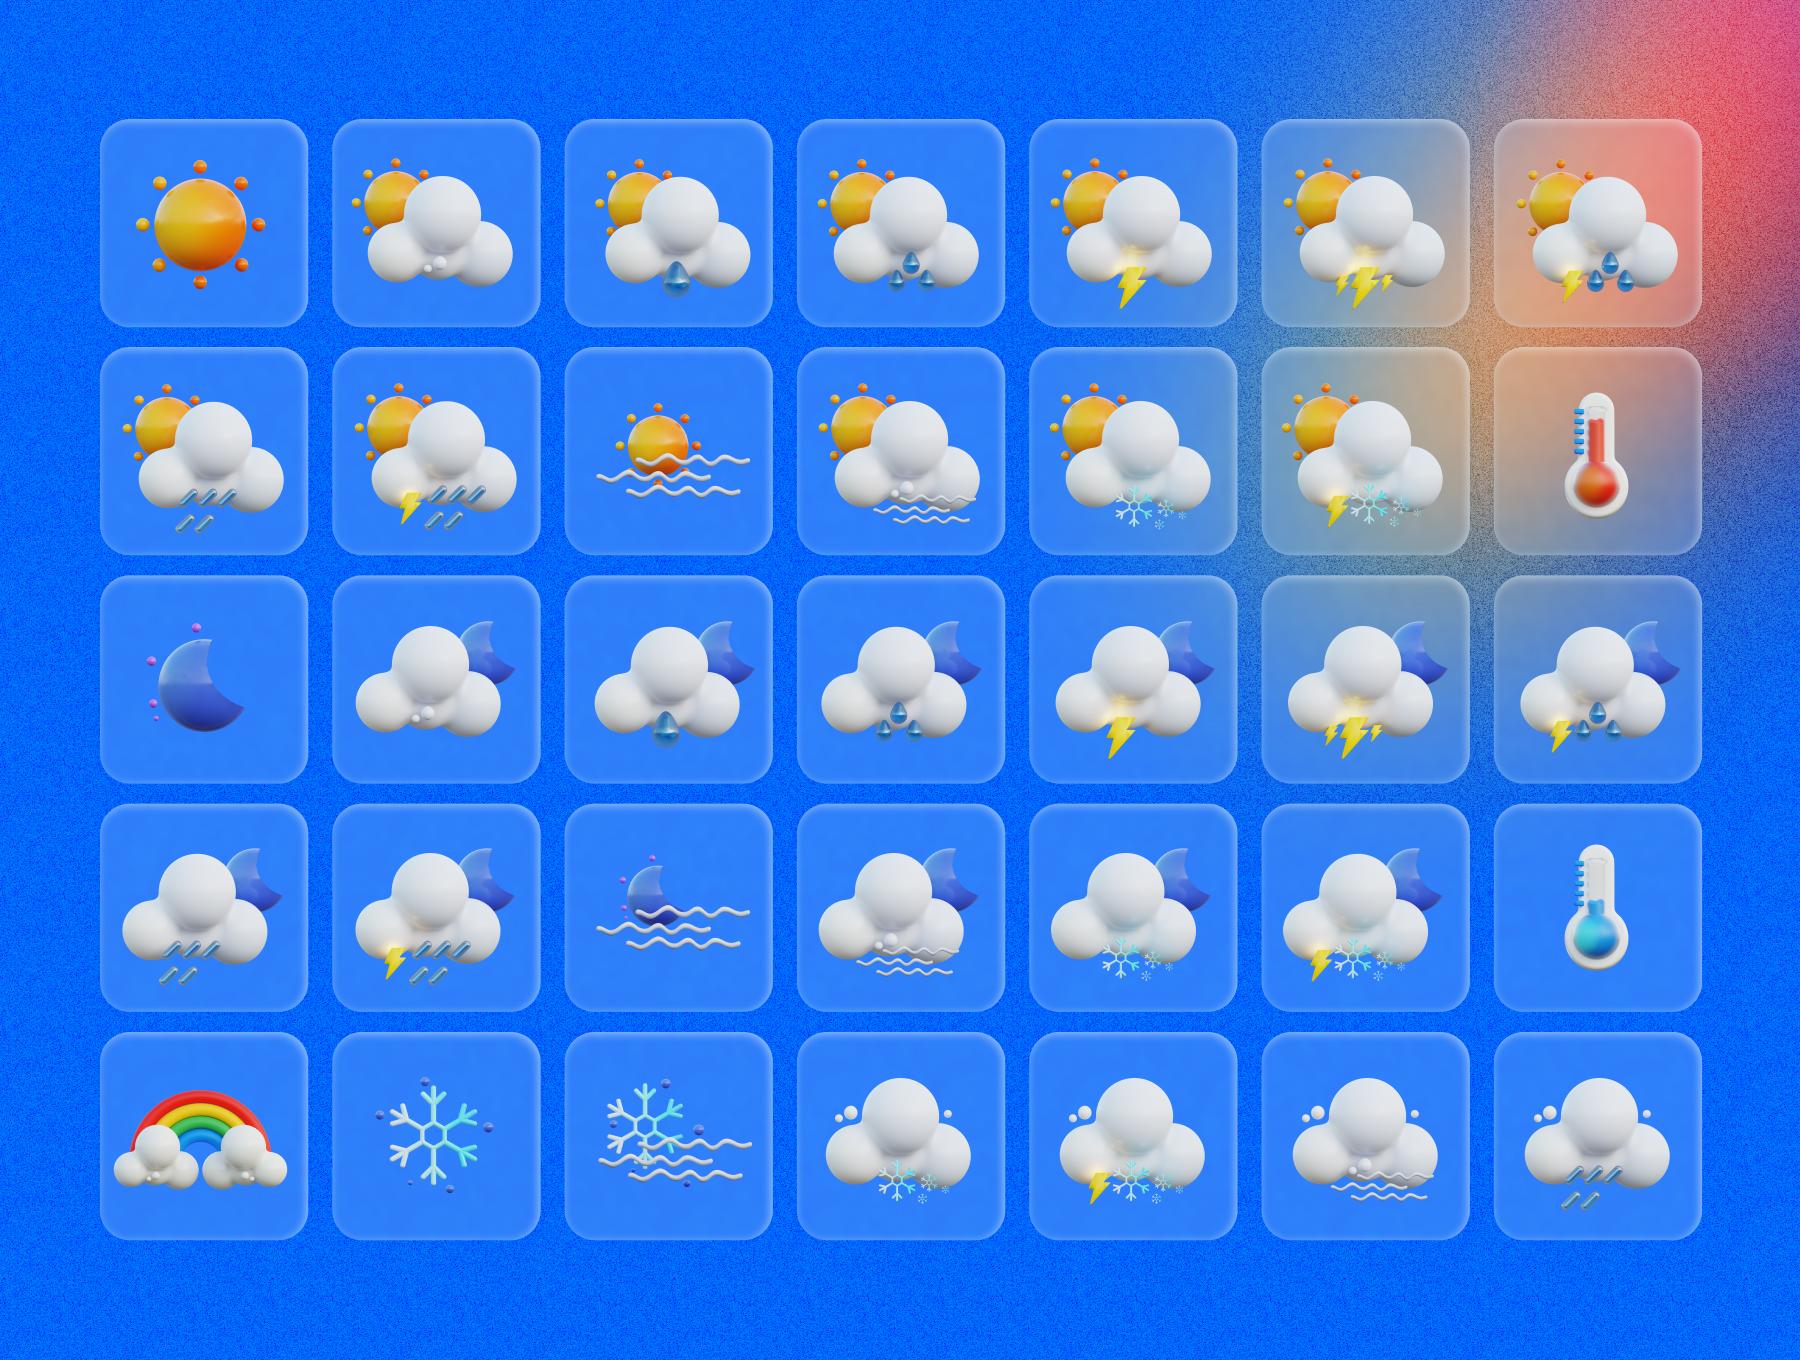 Weatheryx - 天气预报3D图标包 Weatheryx - Weather Forecasts 3D Icons Pack blender, figma格式-3D/图标-到位啦UI